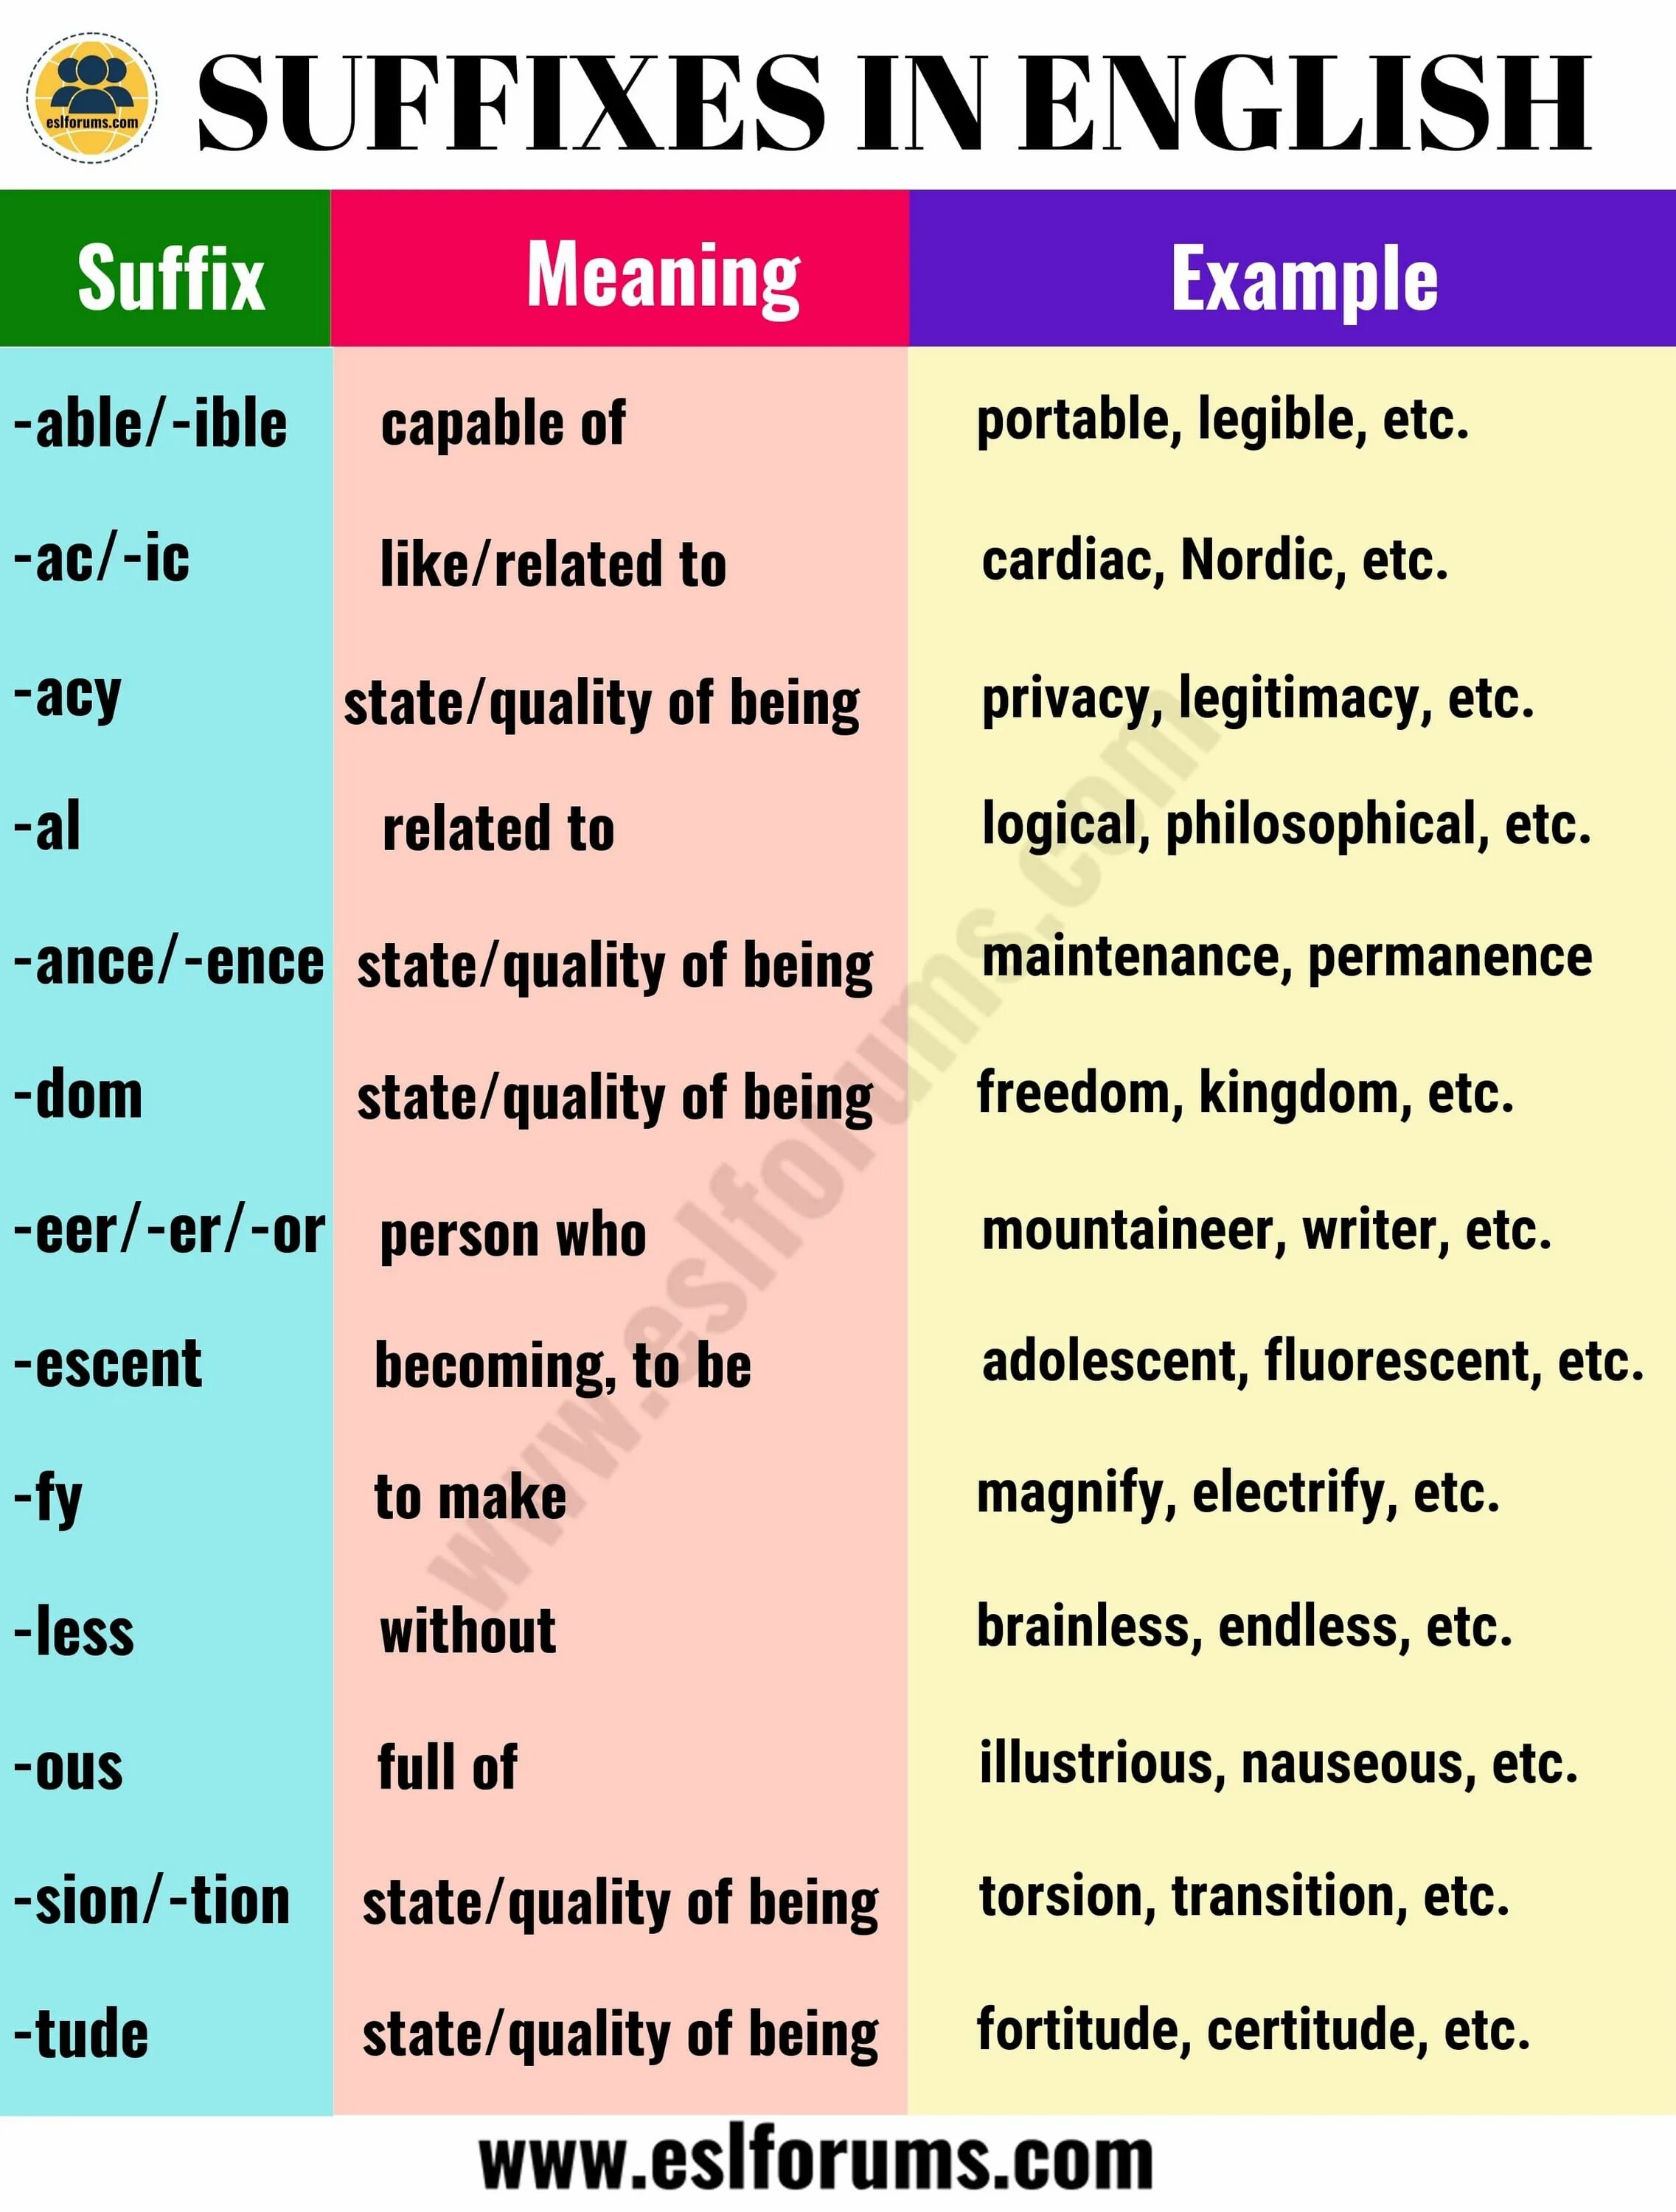 Prefixes in english. Suffixes in English. Prefixes and suffixes. English suffixes and prefixes. Prefix and suffix в английском.